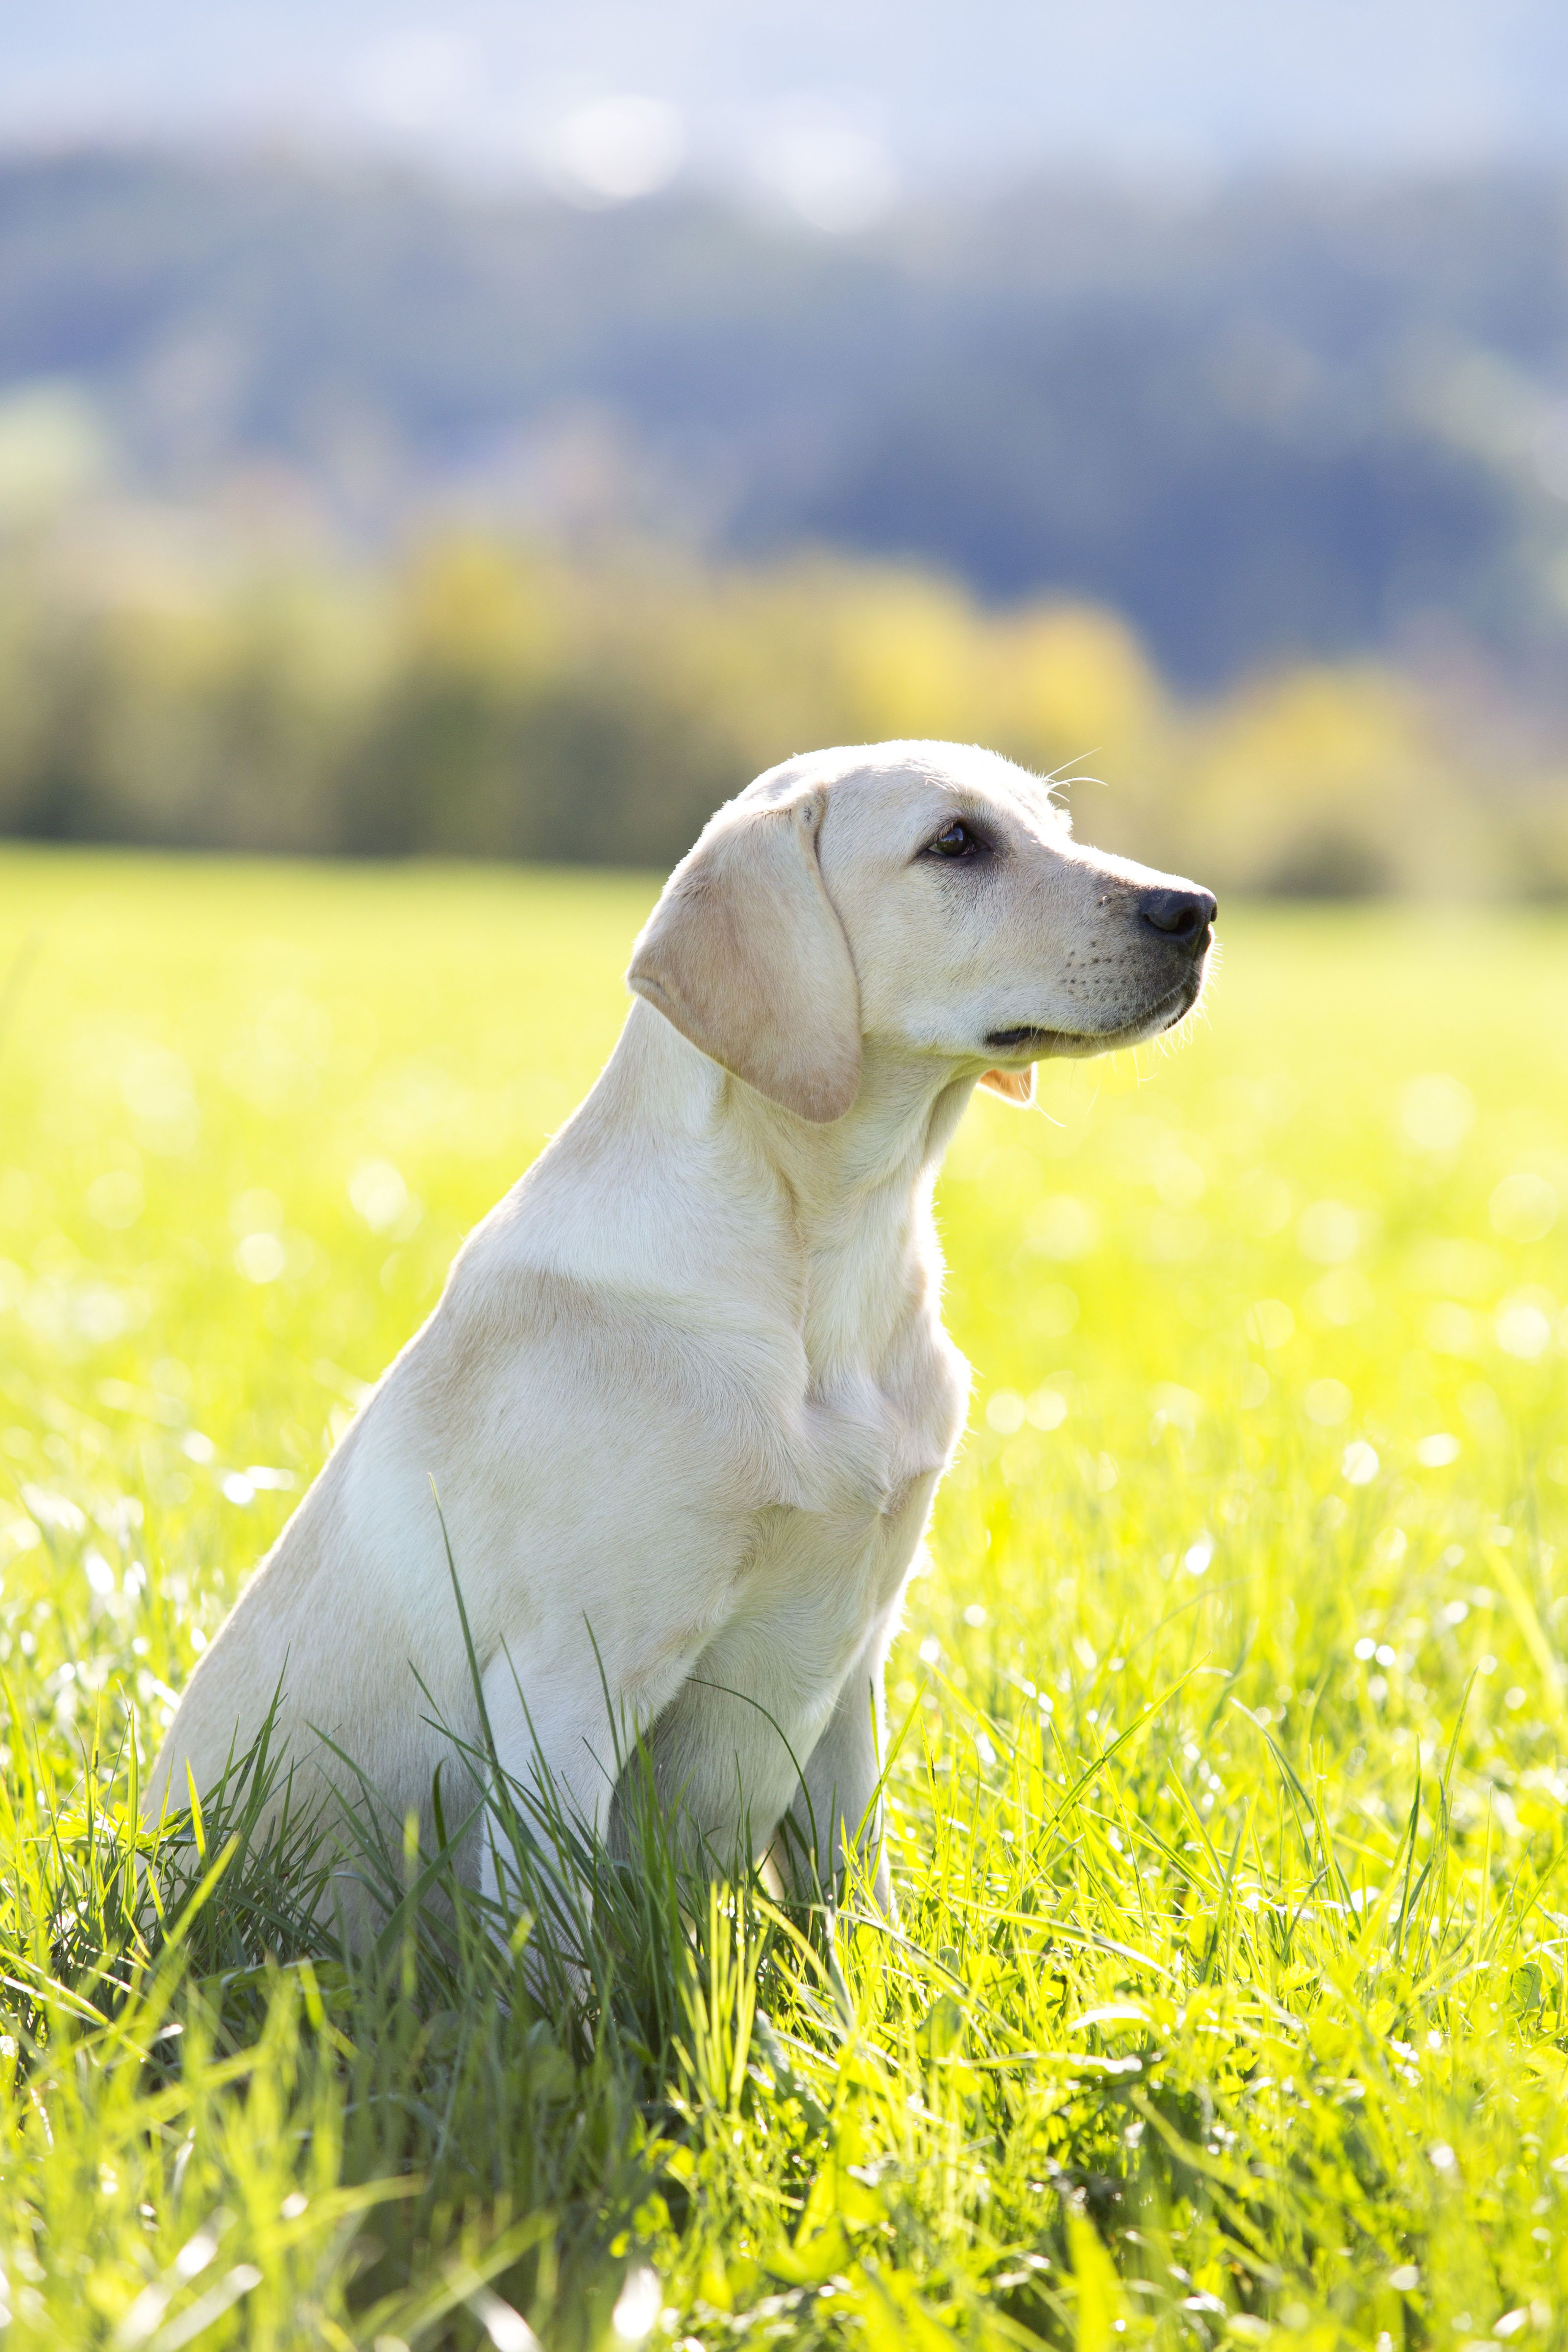 top 5 most intelligent dog breeds